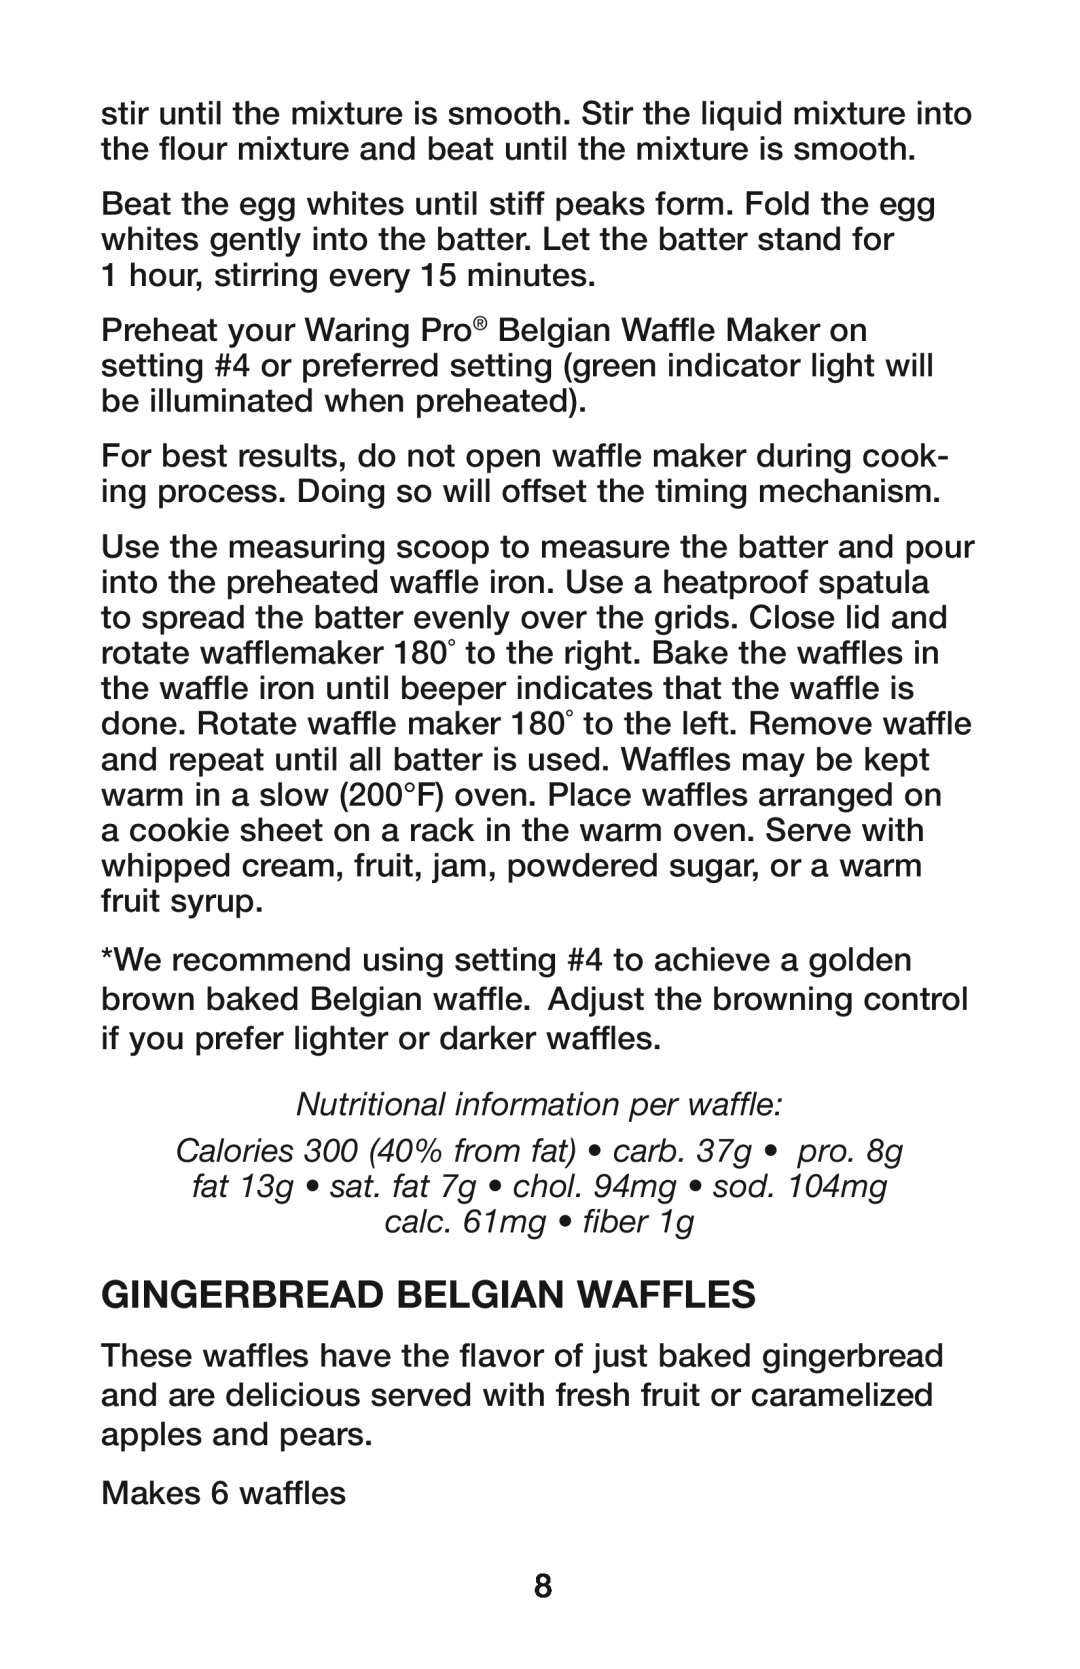 Waring IB8465, WMK300A, IB08WR119 manual Gingerbread Belgian Waffles, Nutritional information per waffle 